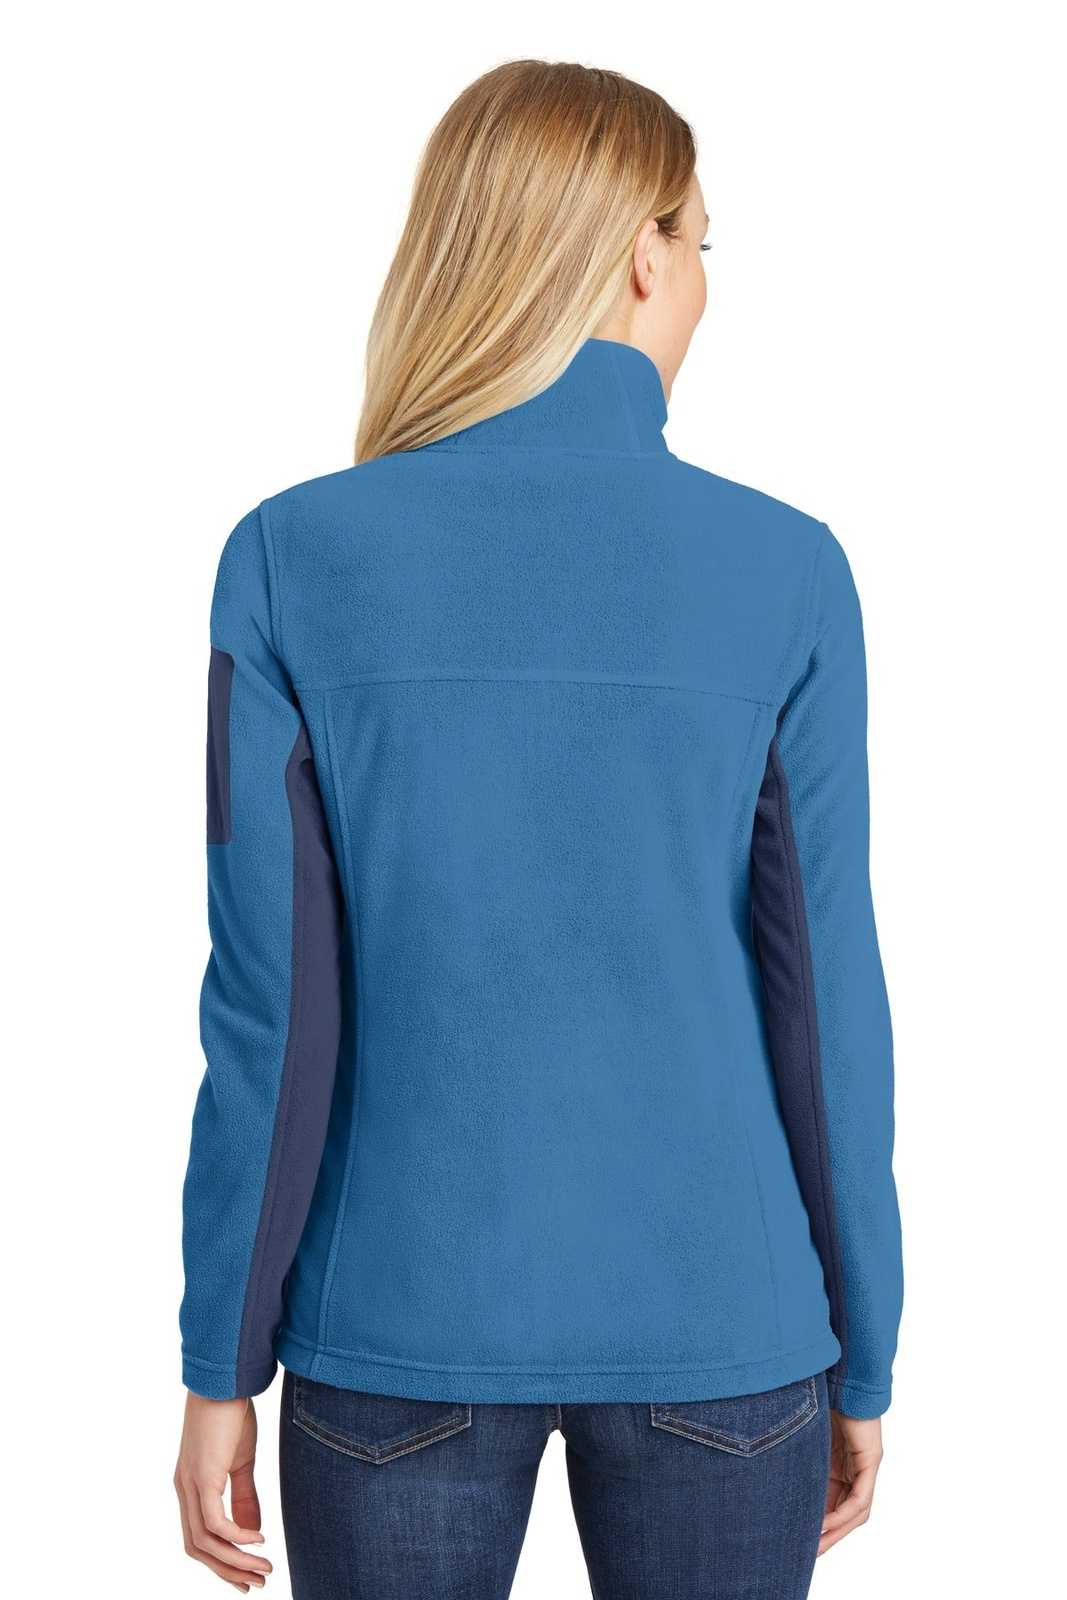 Port Authority L233 Ladies Summit Fleece Full-Zip Jacket - Regal Blue Dress Blue Navy - HIT a Double - 1